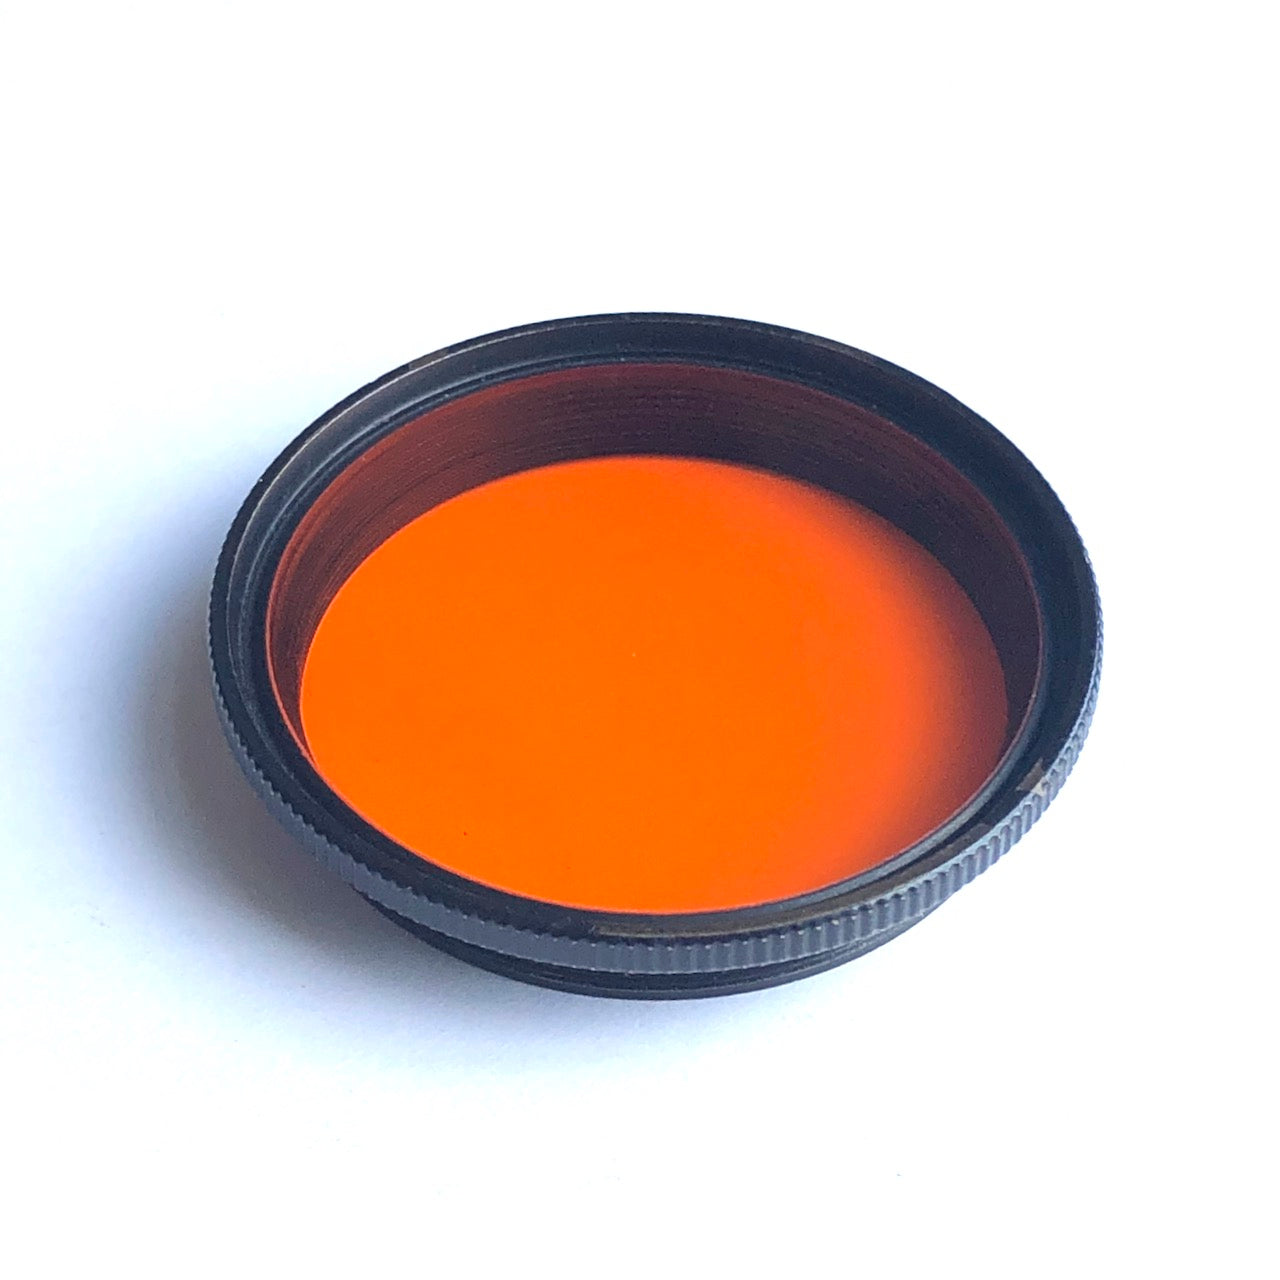 Leitz Or (orange) filter for Summitar